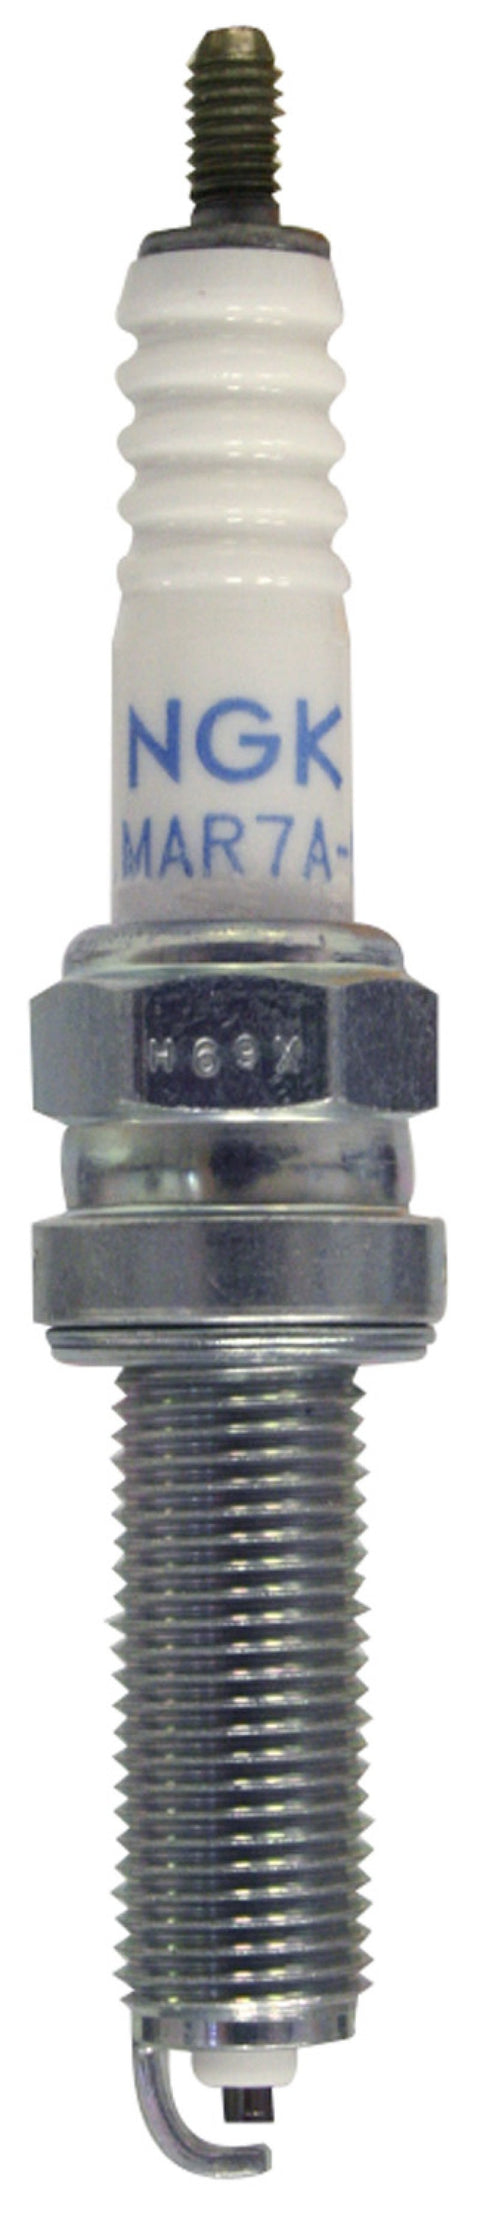 NGK Standard Spark Plug Box of 10 (4908)